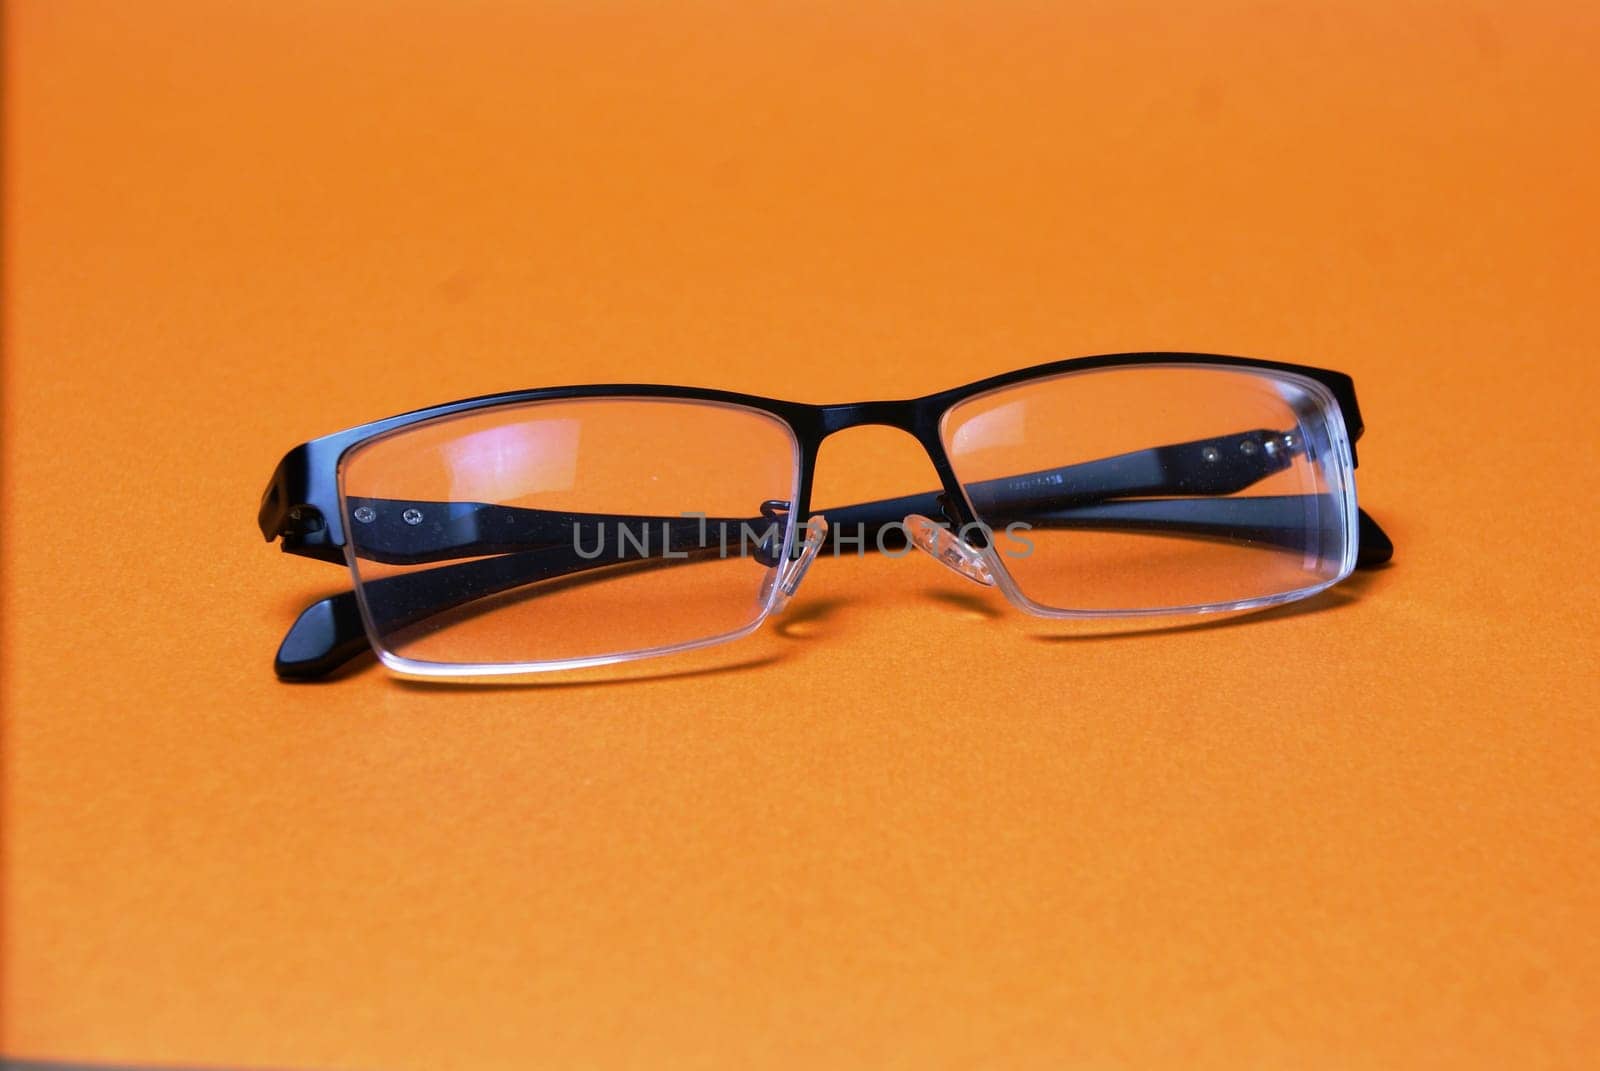 Close-up glasses on a bright orange background by Севостьянов